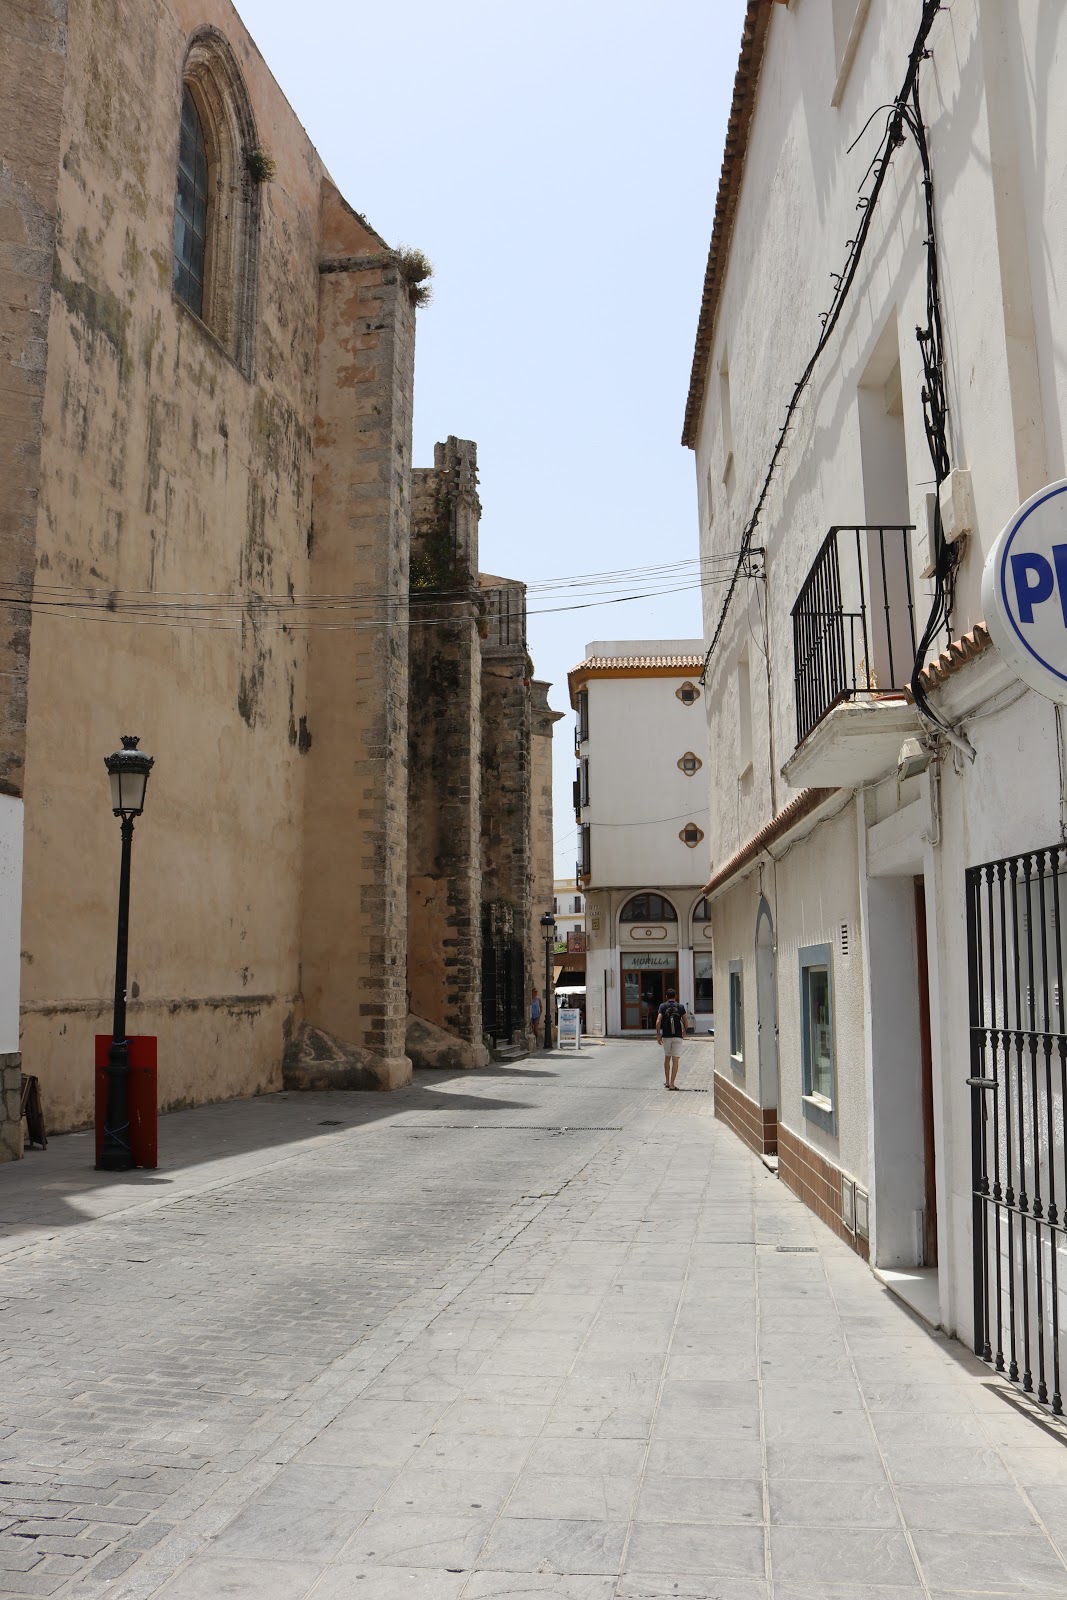 High Street in the Old Town, Tarifa, Spain